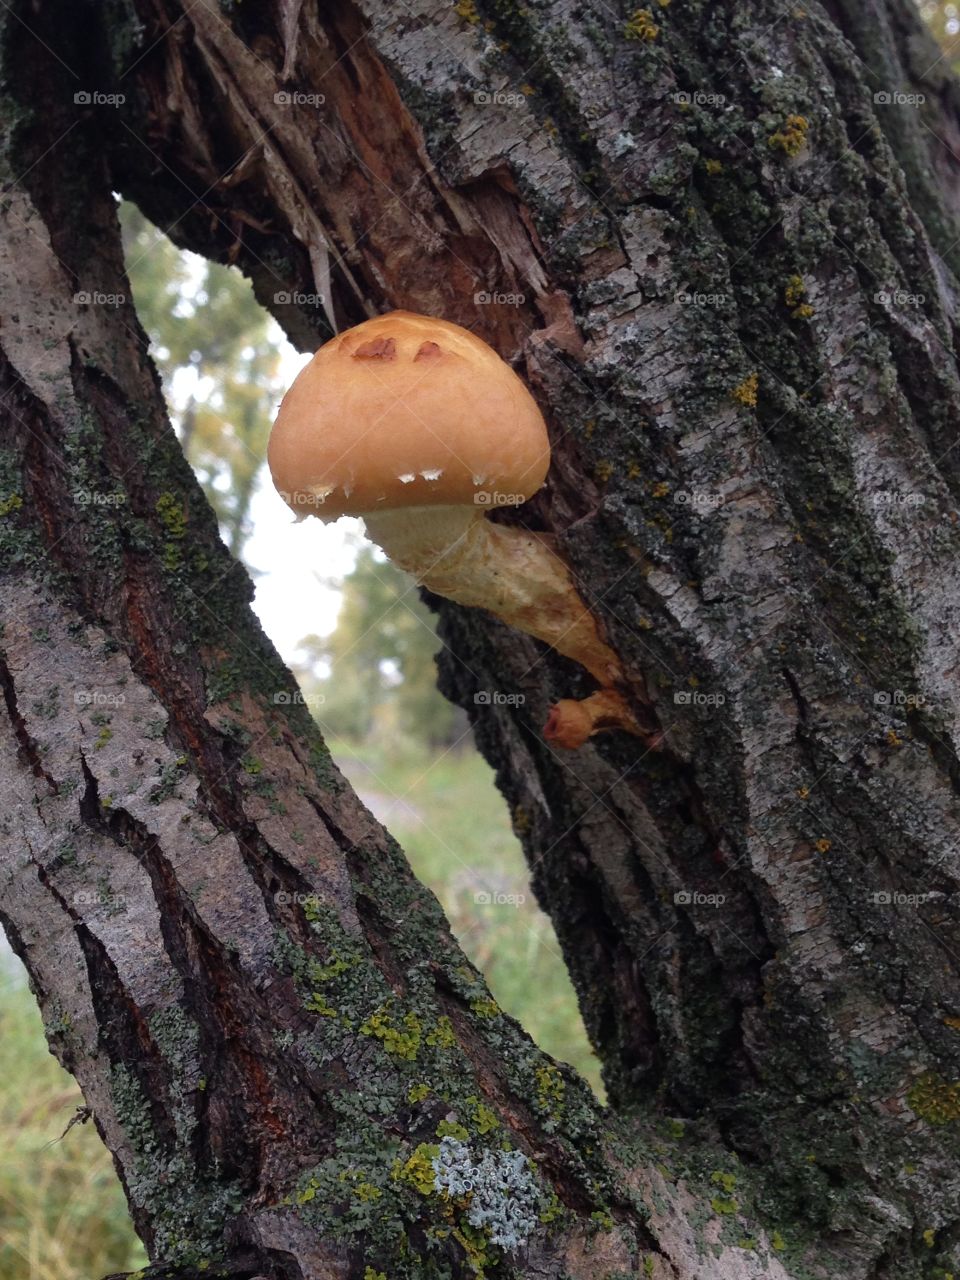 Fungi growing on textured tree bark